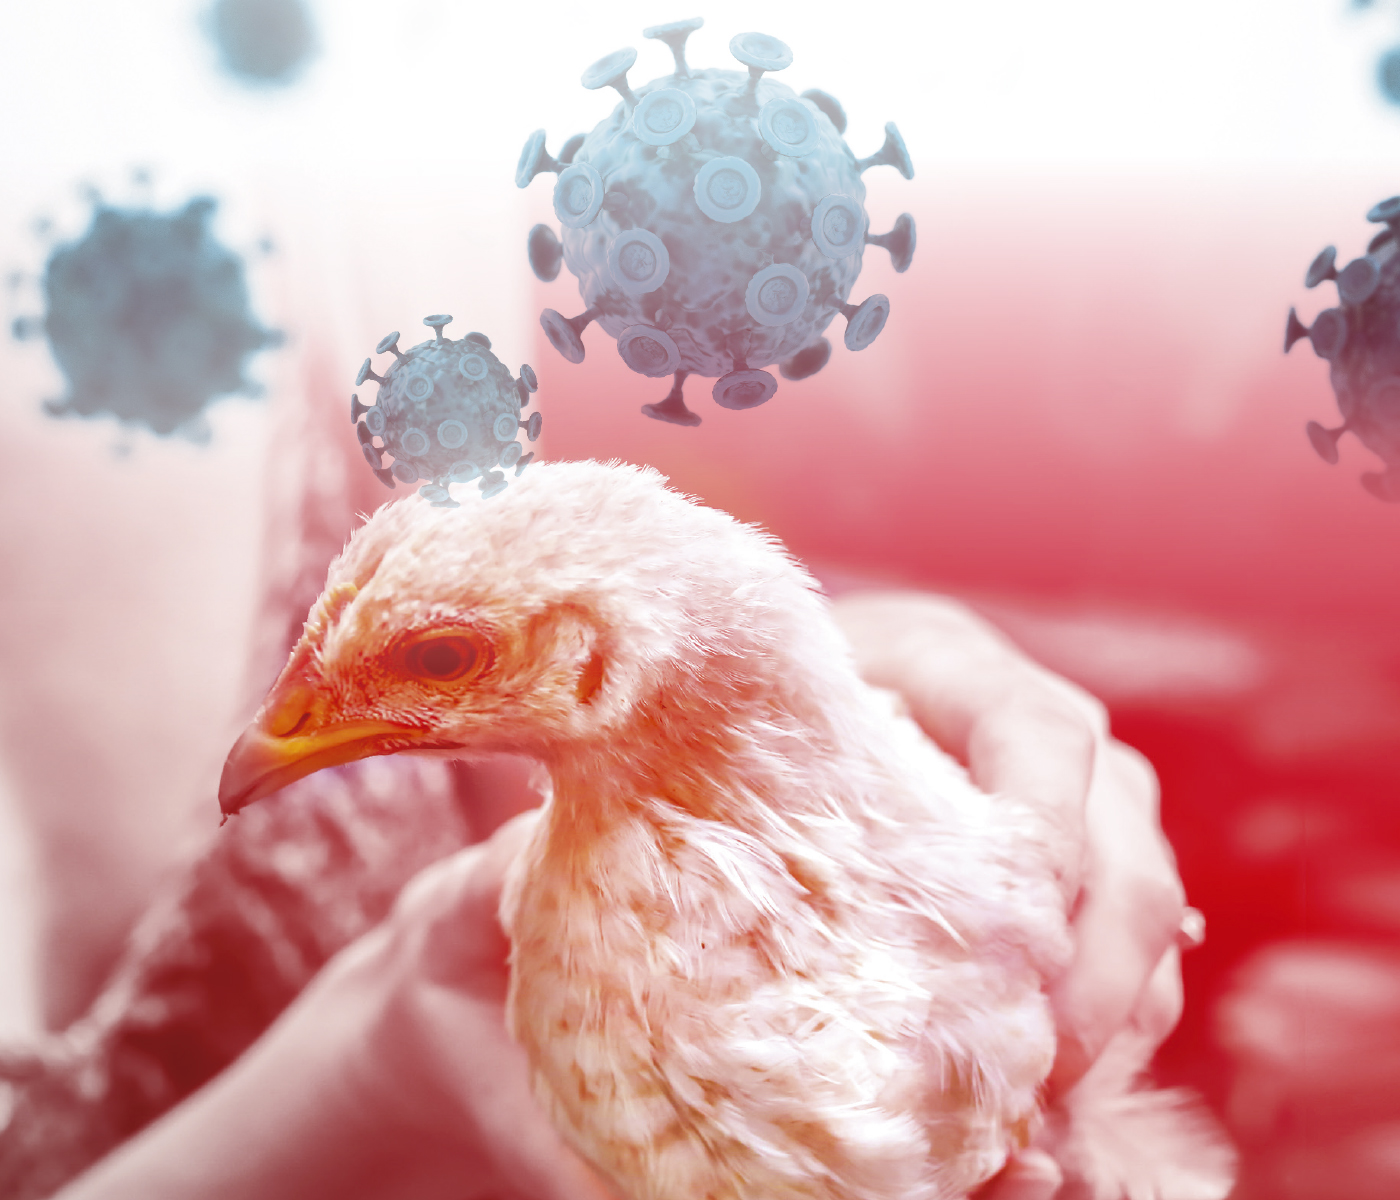 La Influenza Aviar Altamente Patógena actual:  ¿Vacunar o no vacunar?